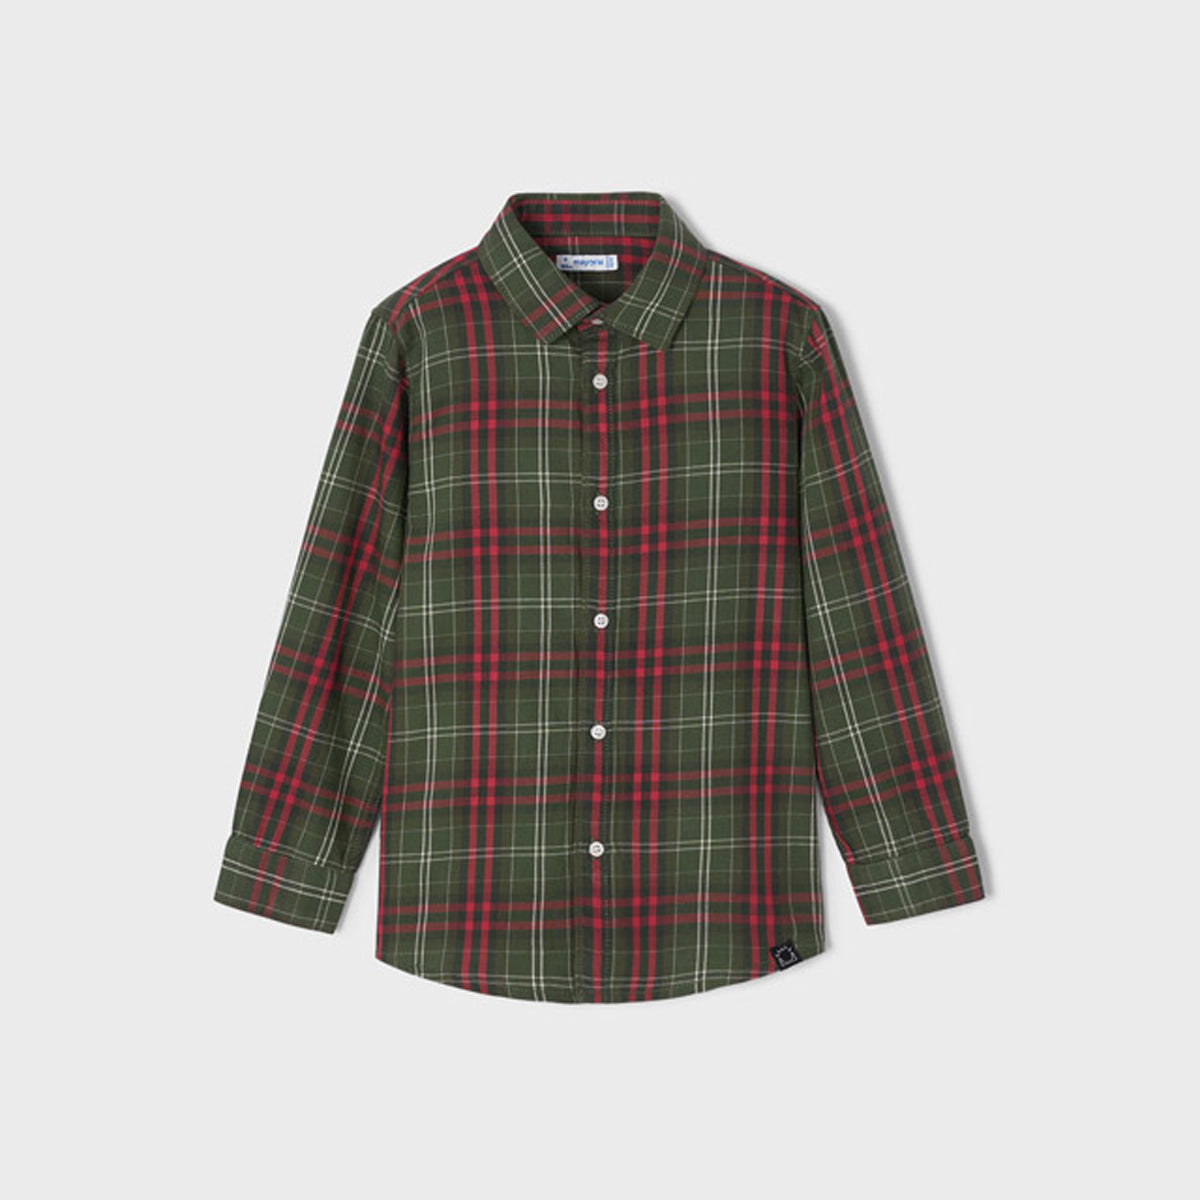 Ecofriends Forest Green & Red Checkered Long Sleeve Shirt